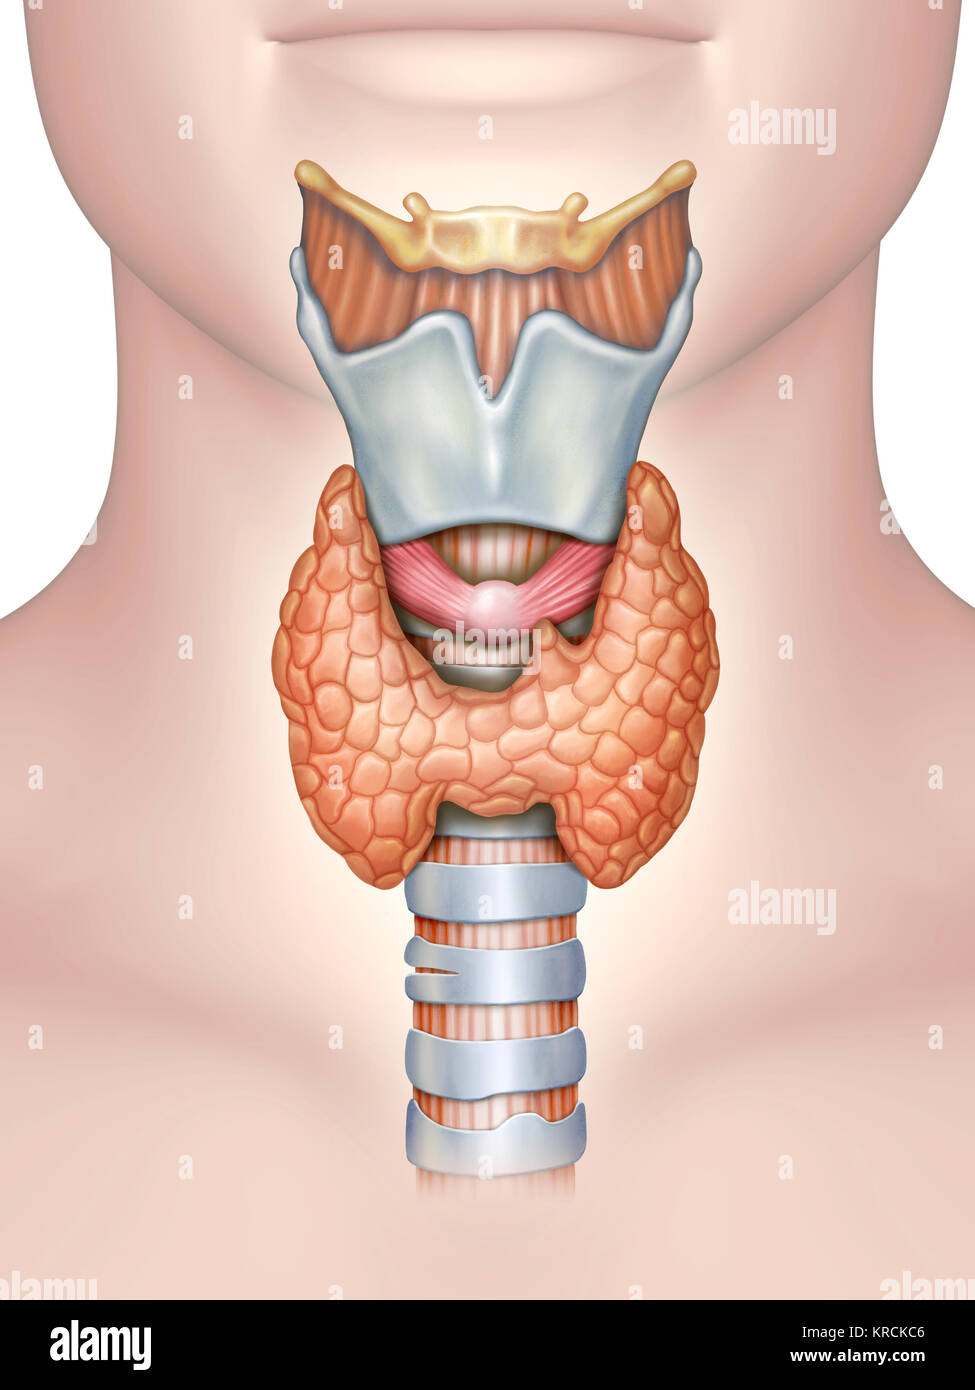 Anatomy of the thyroid gland. Digital illustration. Stock Photo